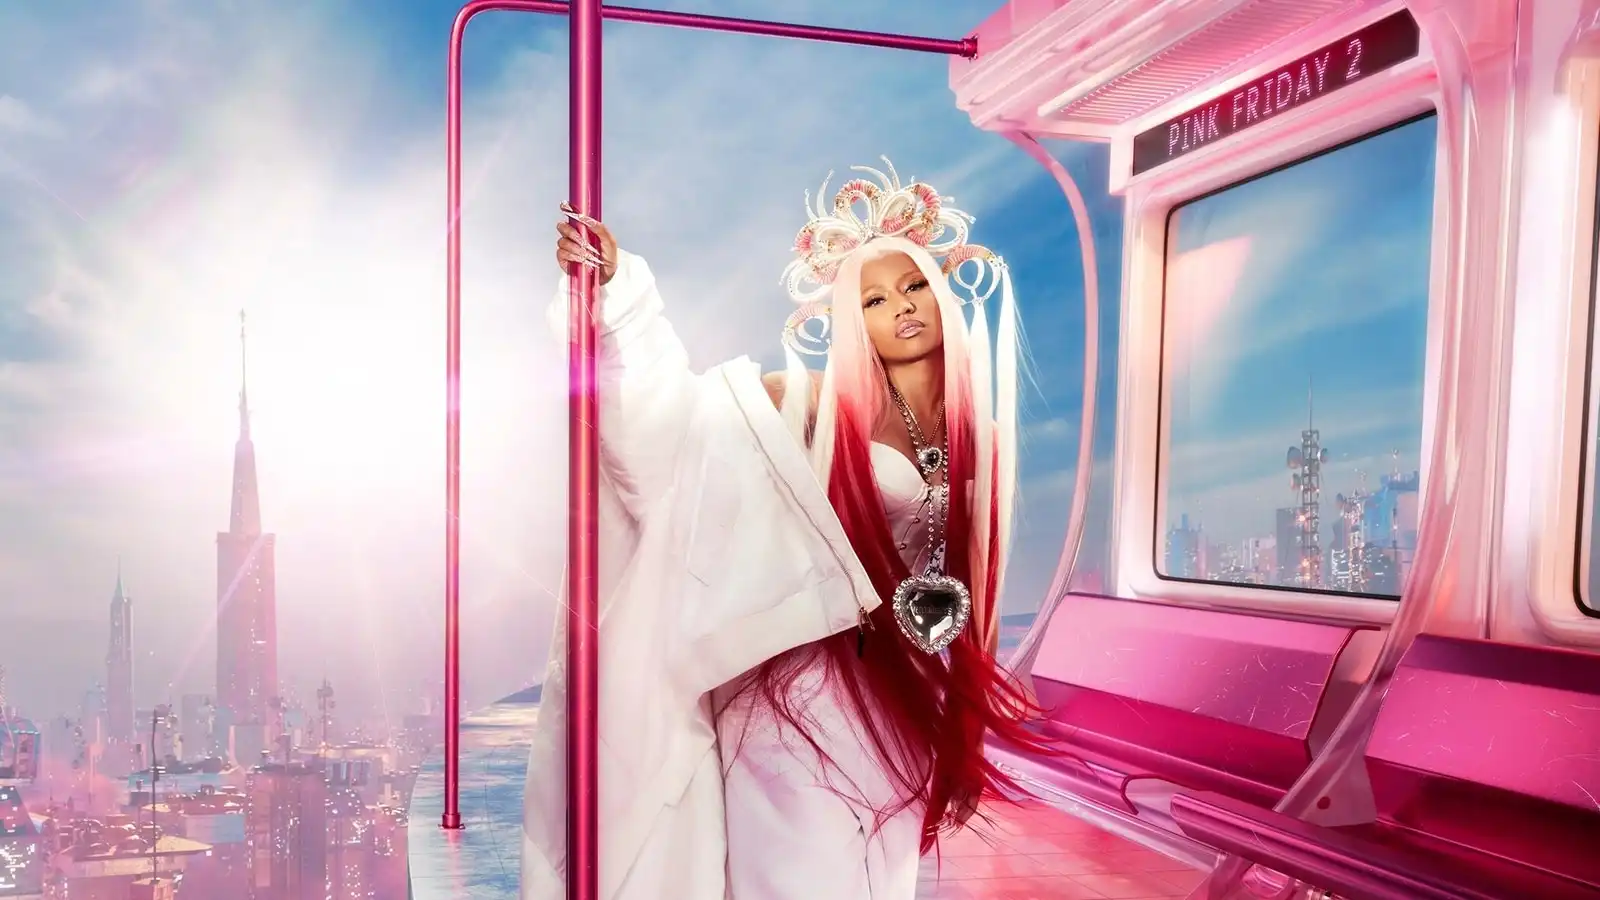 Nicki Minaj Pink Friday 2 Billboard 200 No 1